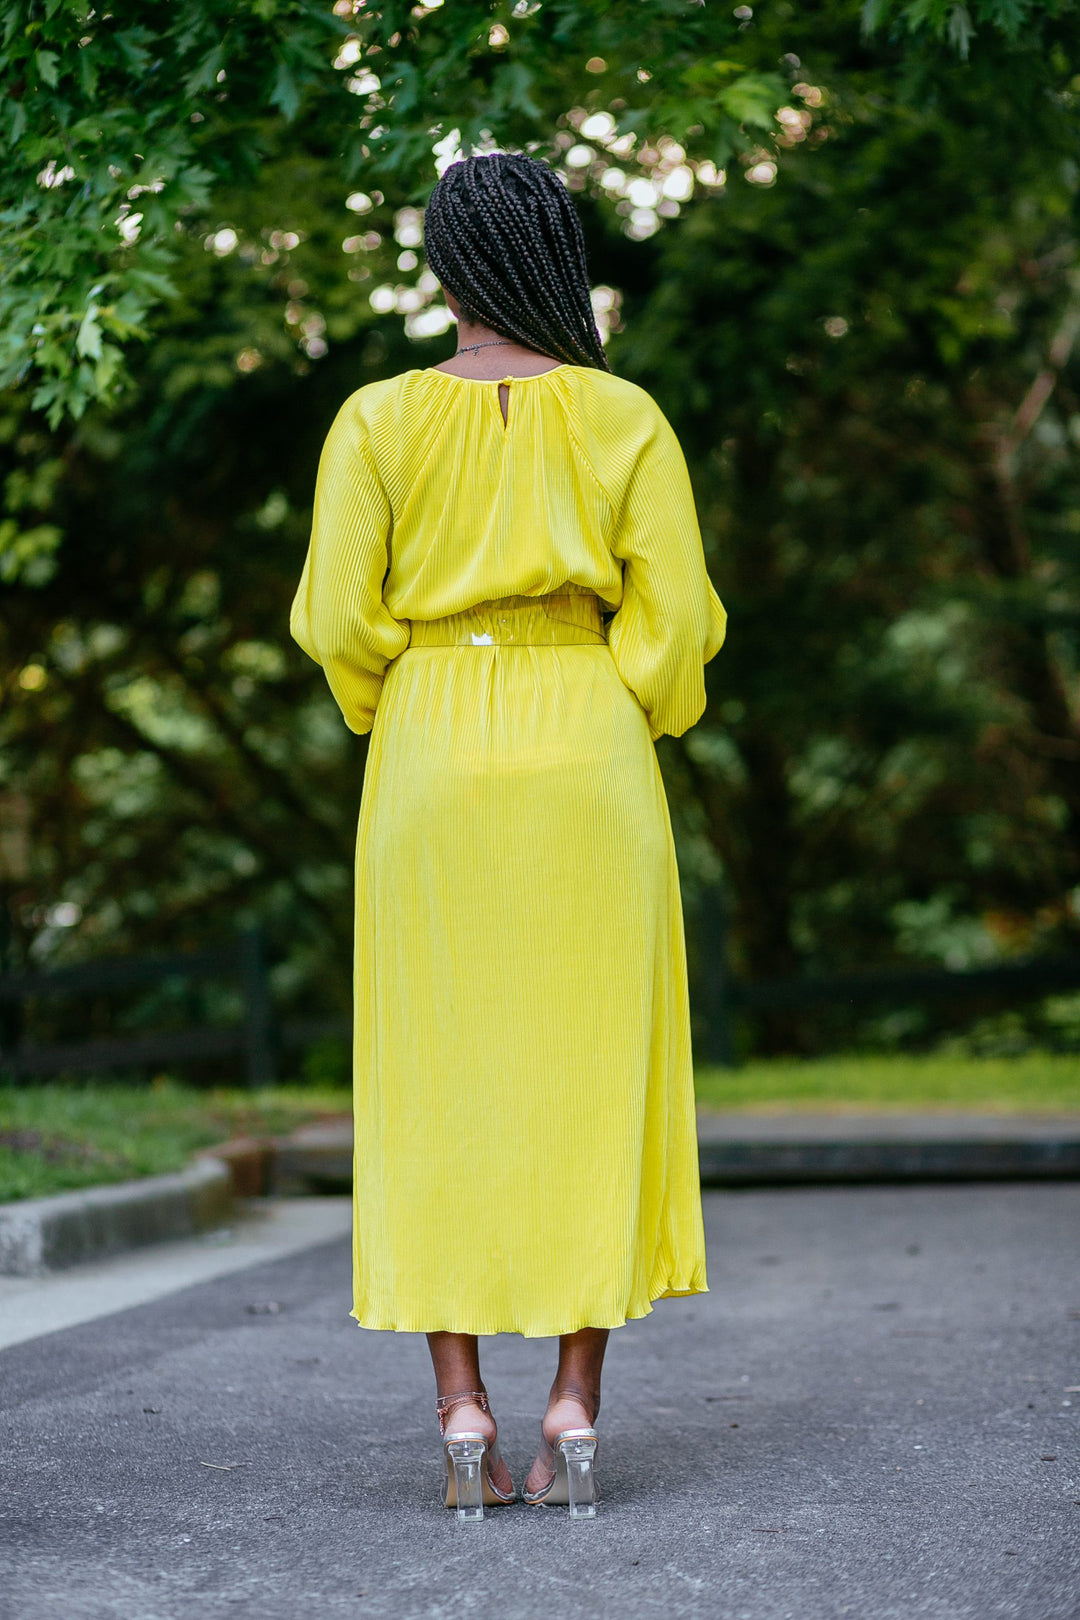 Sunday Best Yellow Dress